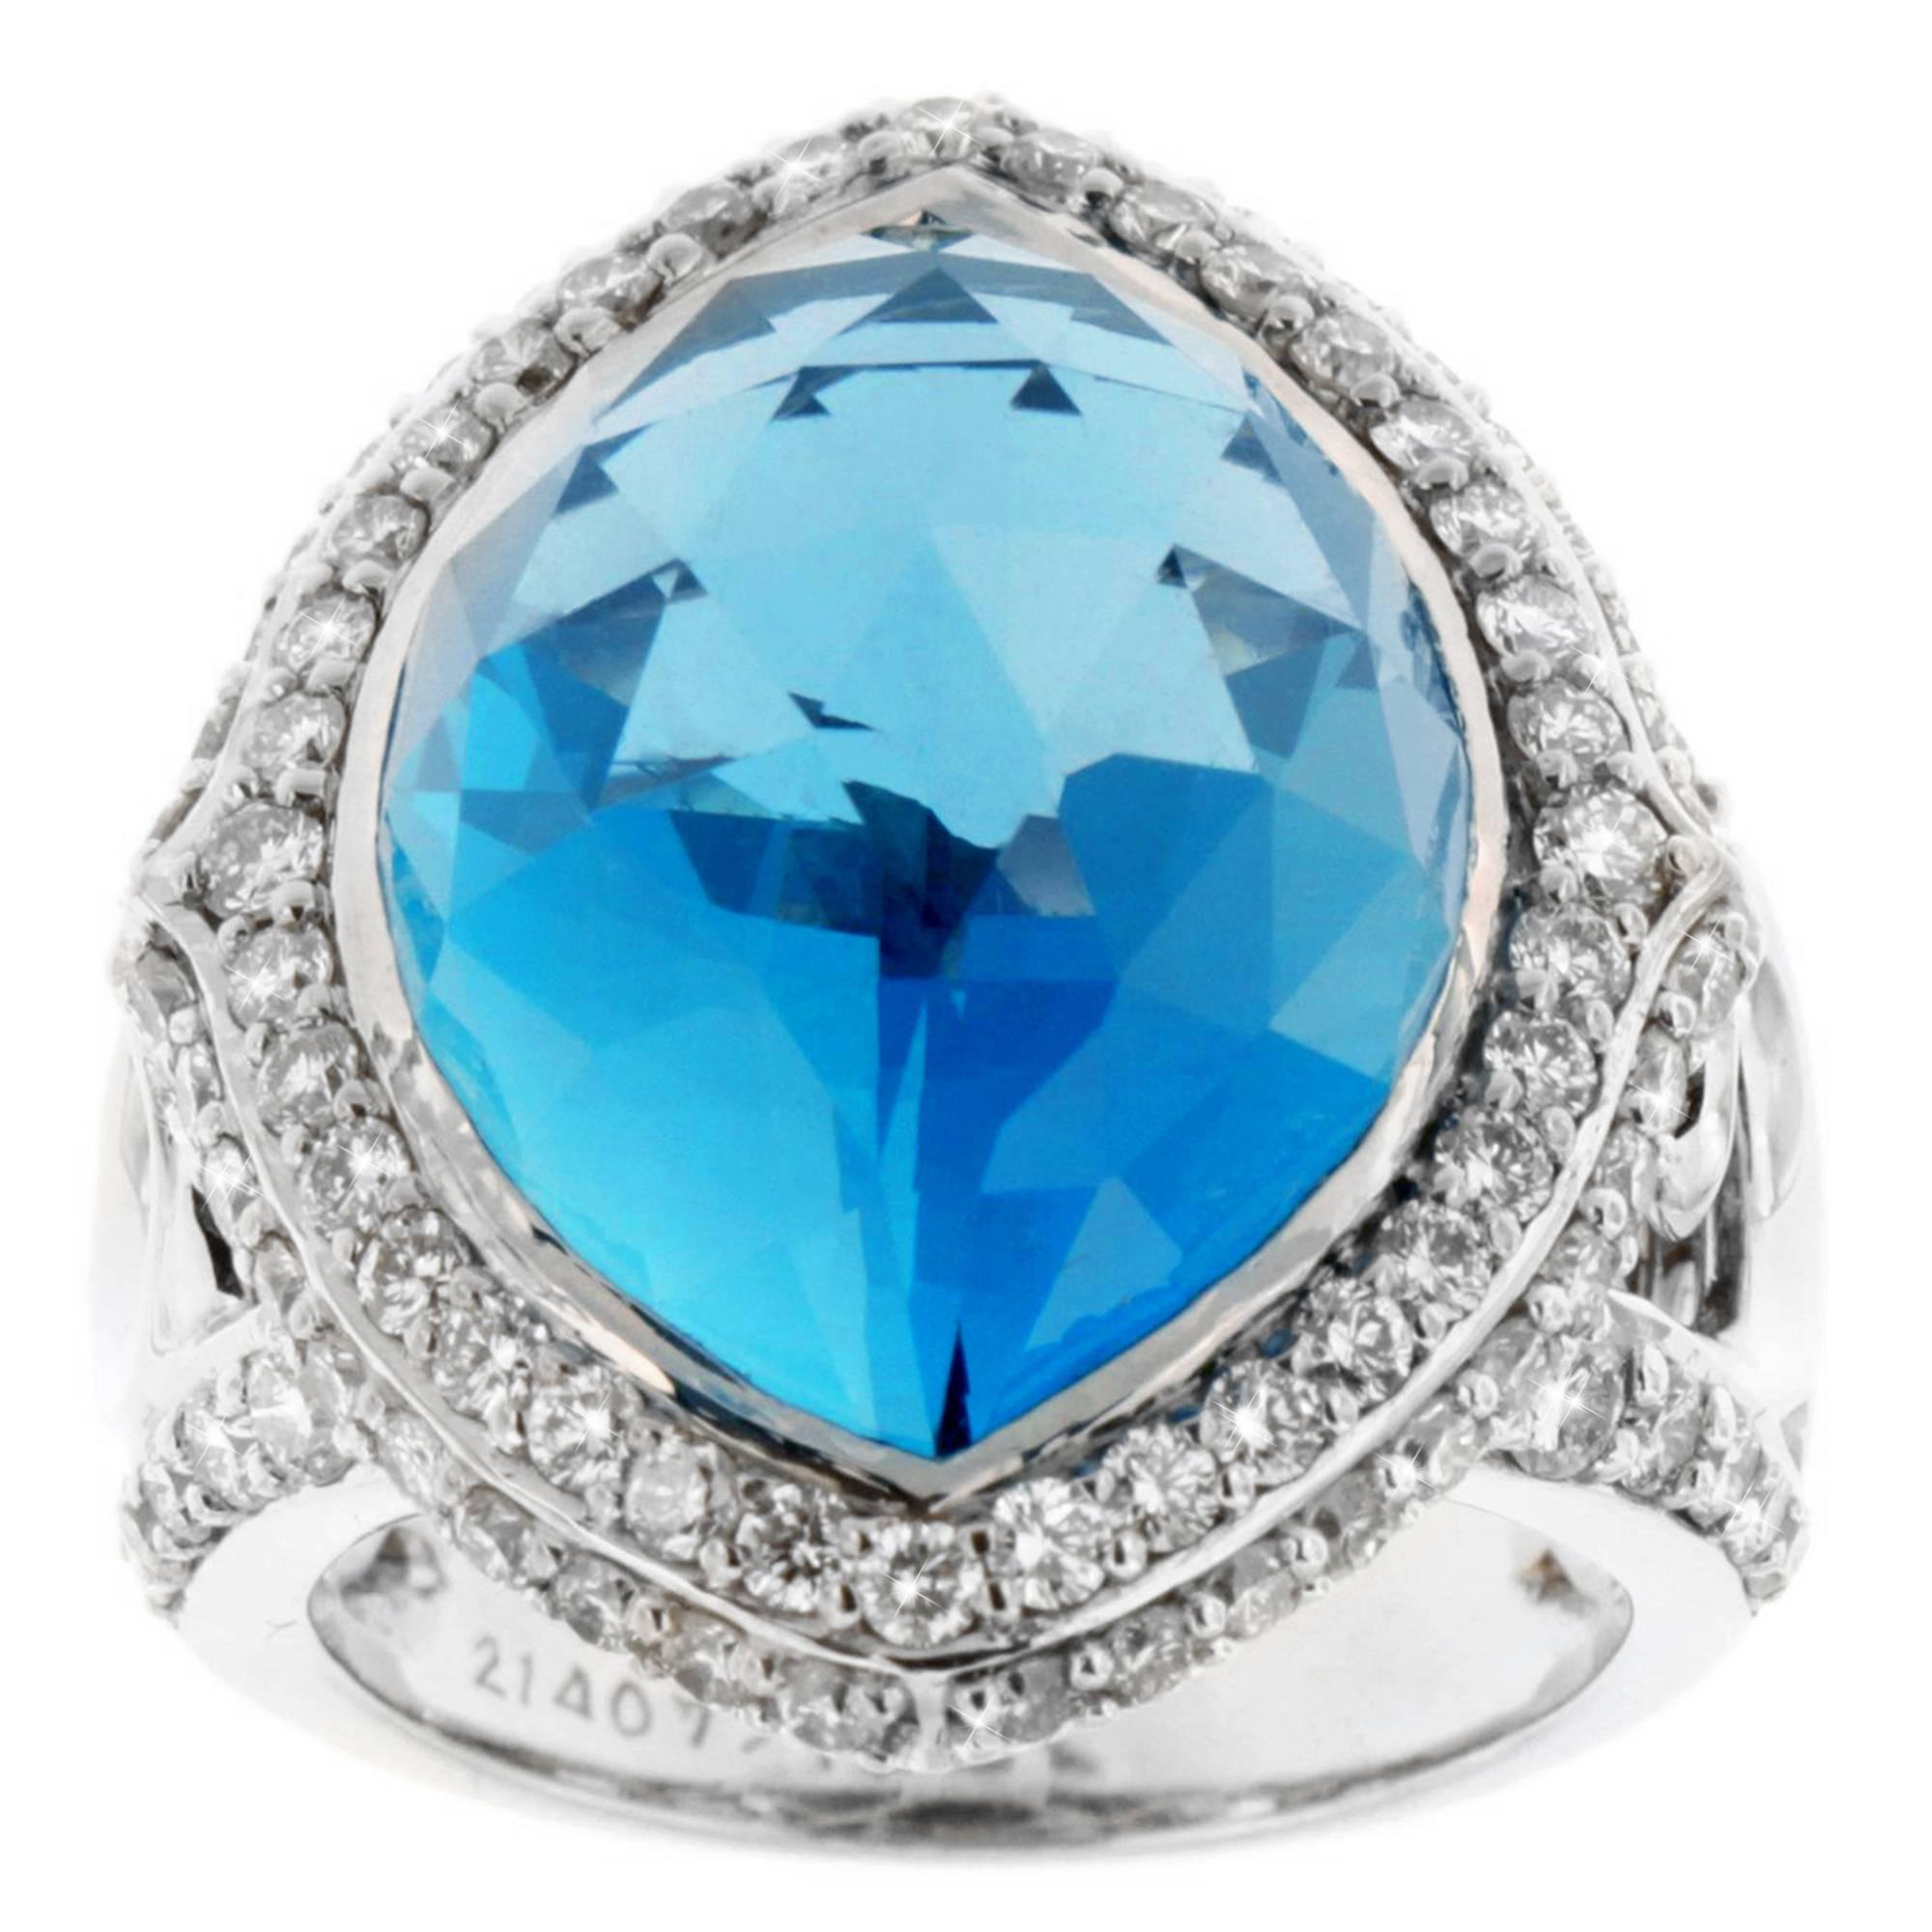 Zorab Creation 22.90 Carat London Blue Topaz Diamond Cocktail Ring